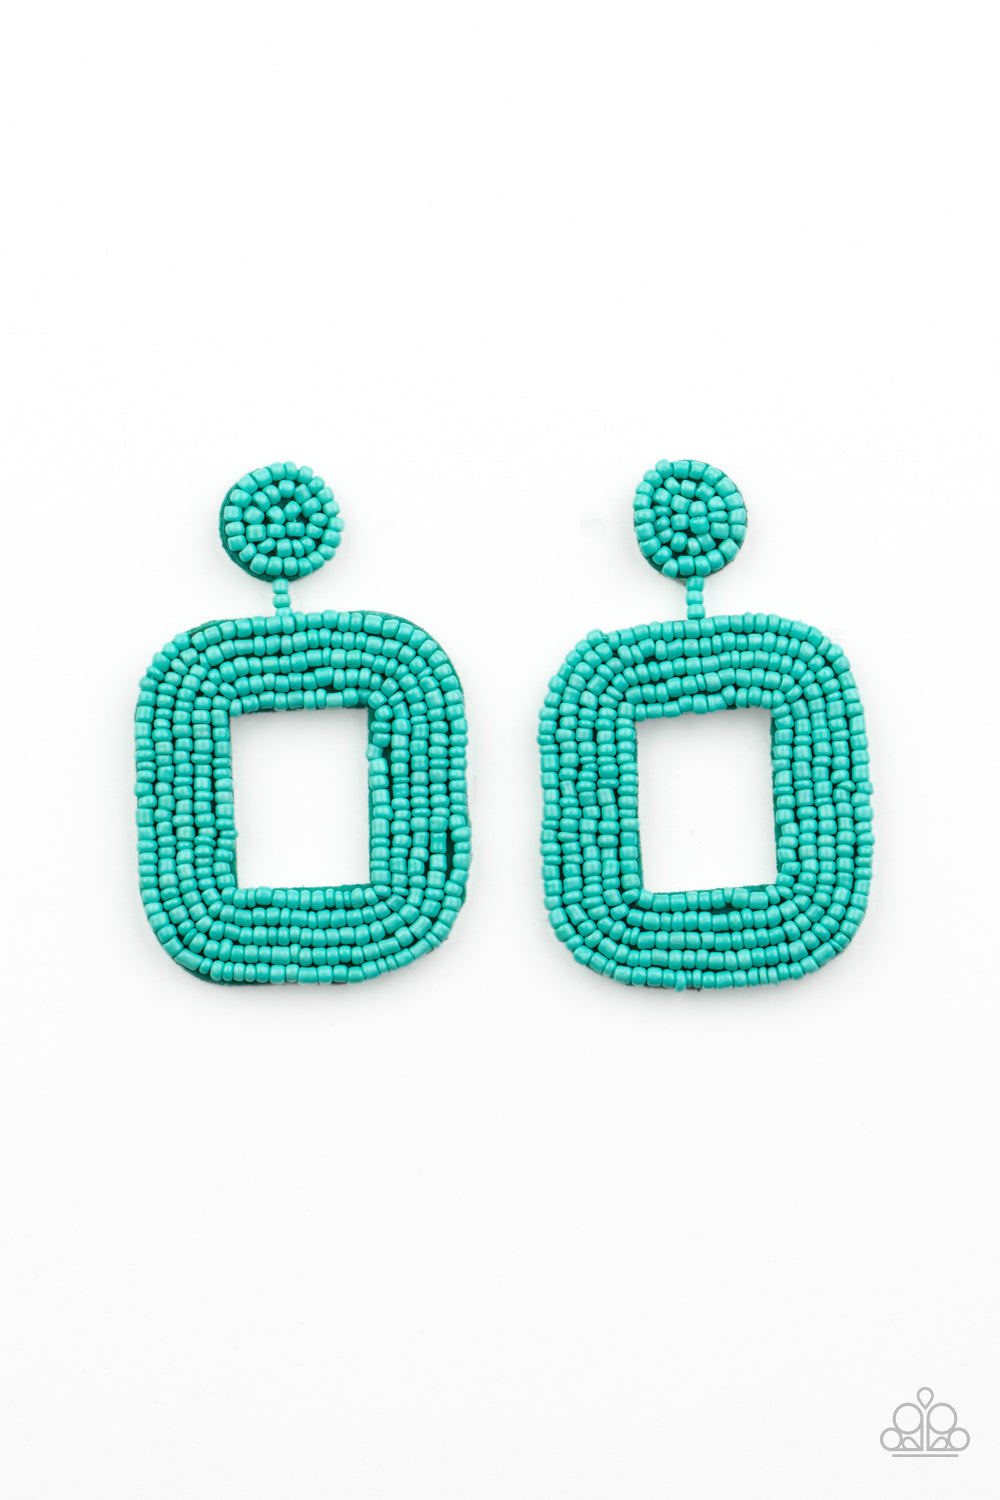 Beaded Bella - blue - Paparazzi earrings